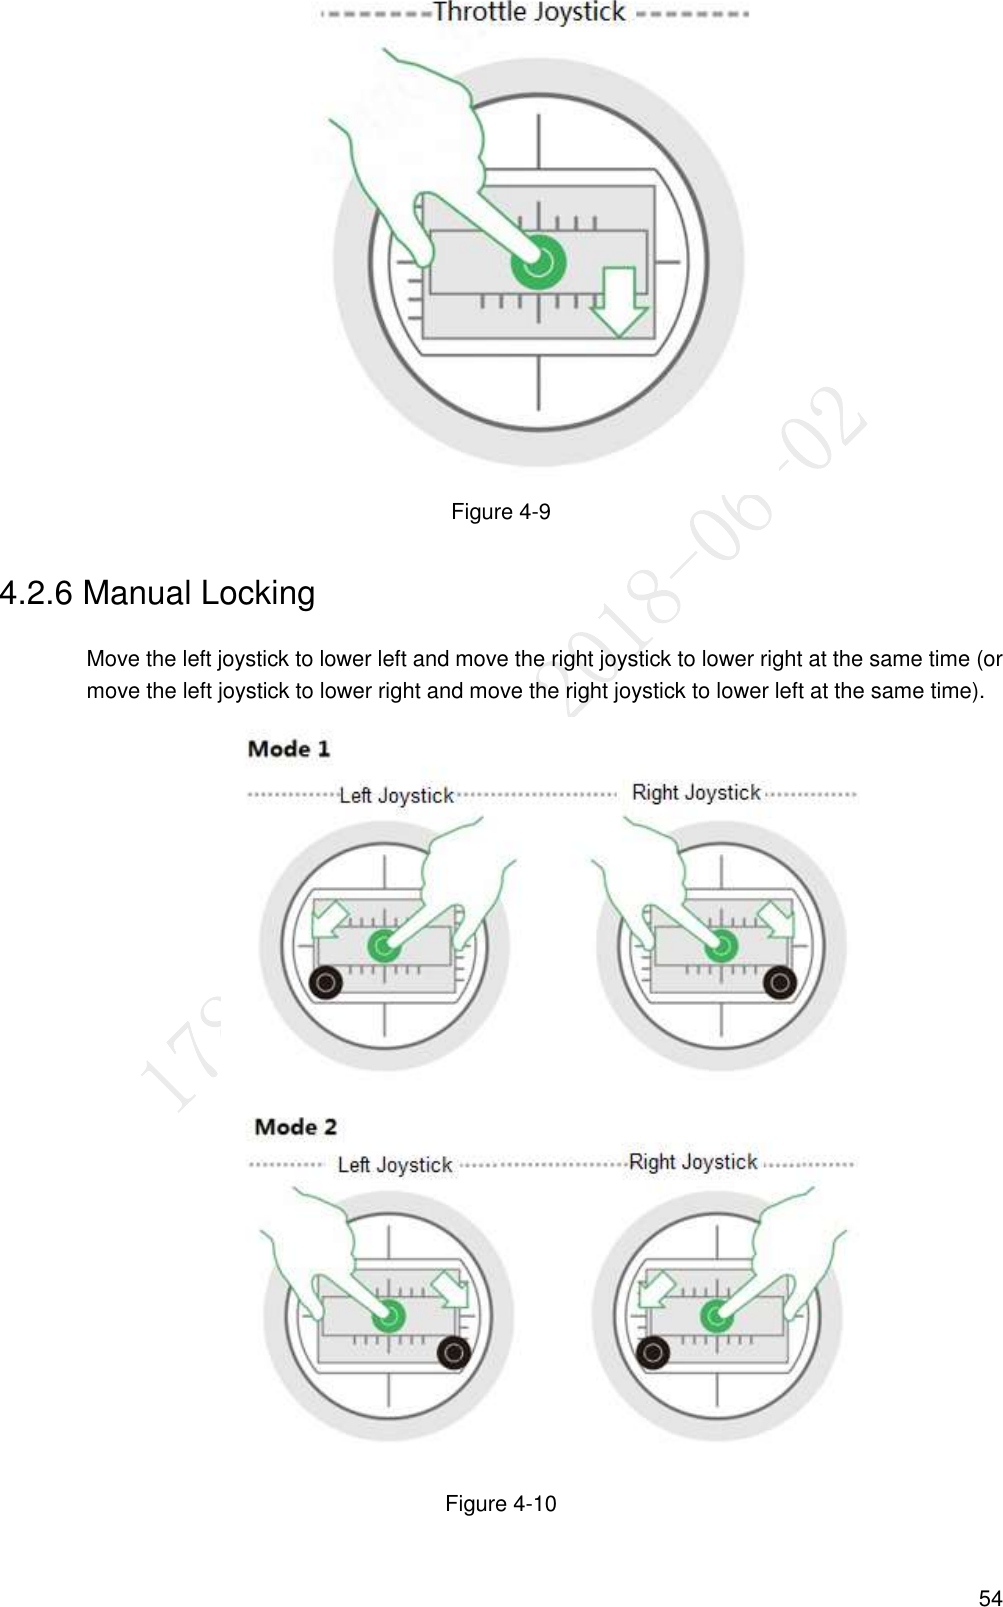  54  Figure 4-9 4.2.6 Manual Locking Move the left joystick to lower left and move the right joystick to lower right at the same time (or move the left joystick to lower right and move the right joystick to lower left at the same time).  Figure 4-10 